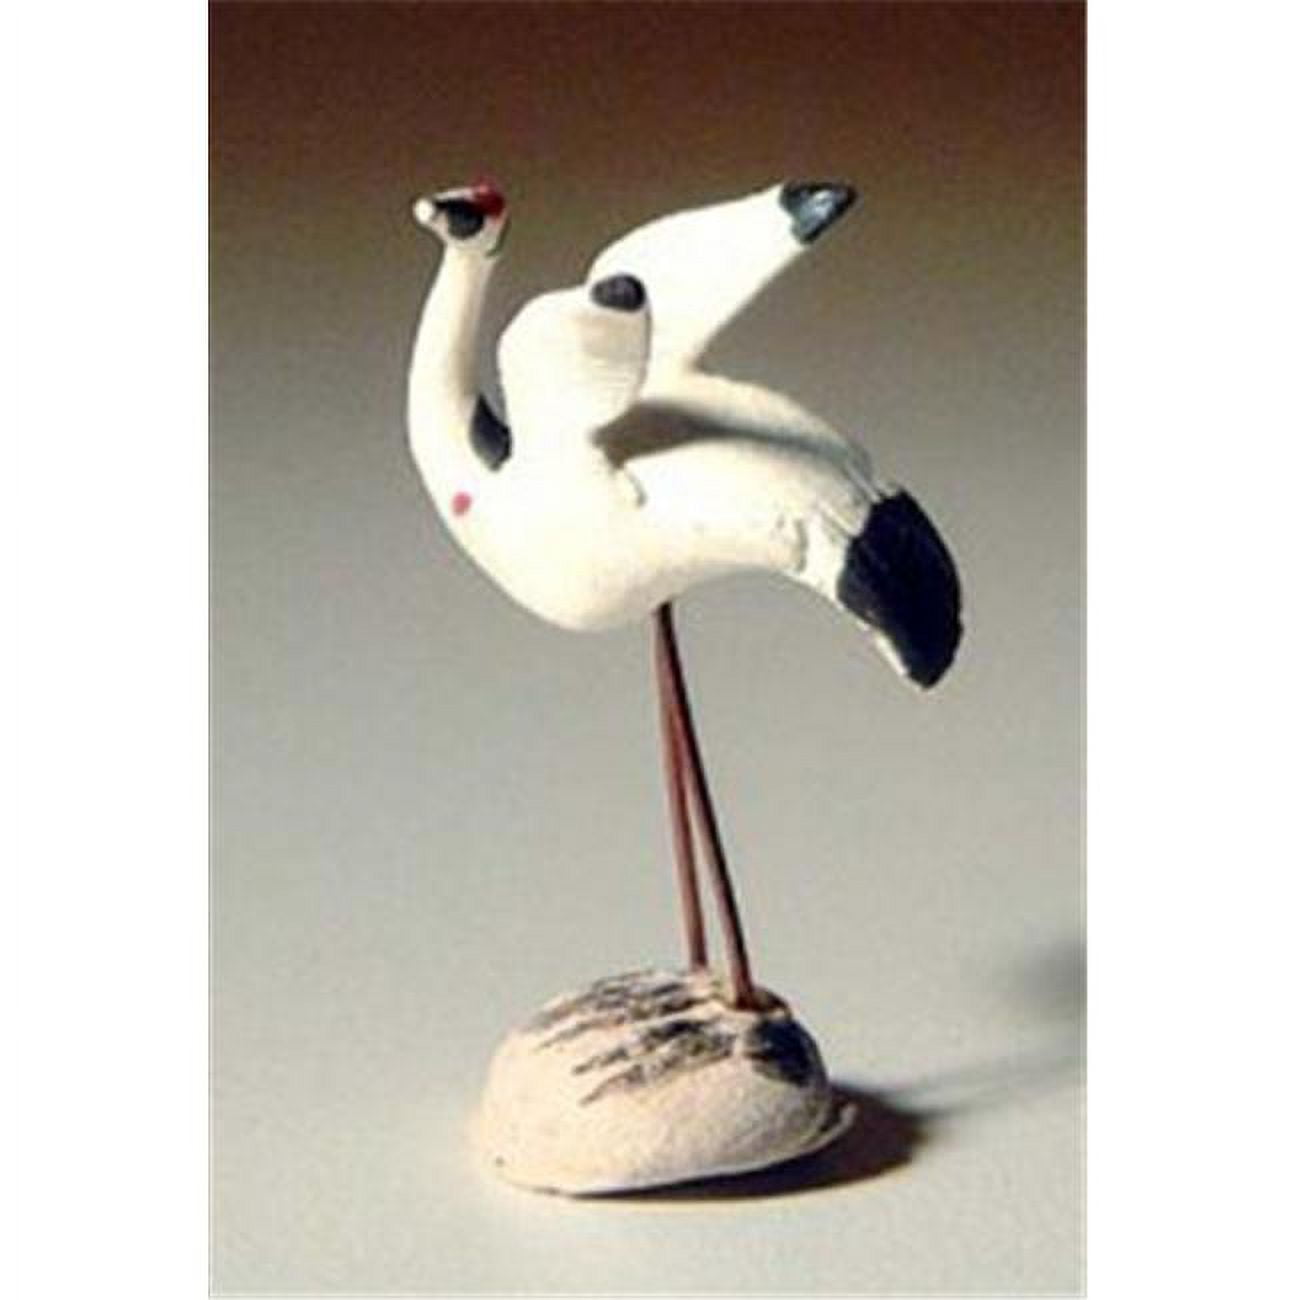 Picture of Bonsai Boy b1197 1 in. Ceramic Crane Figurine - Small